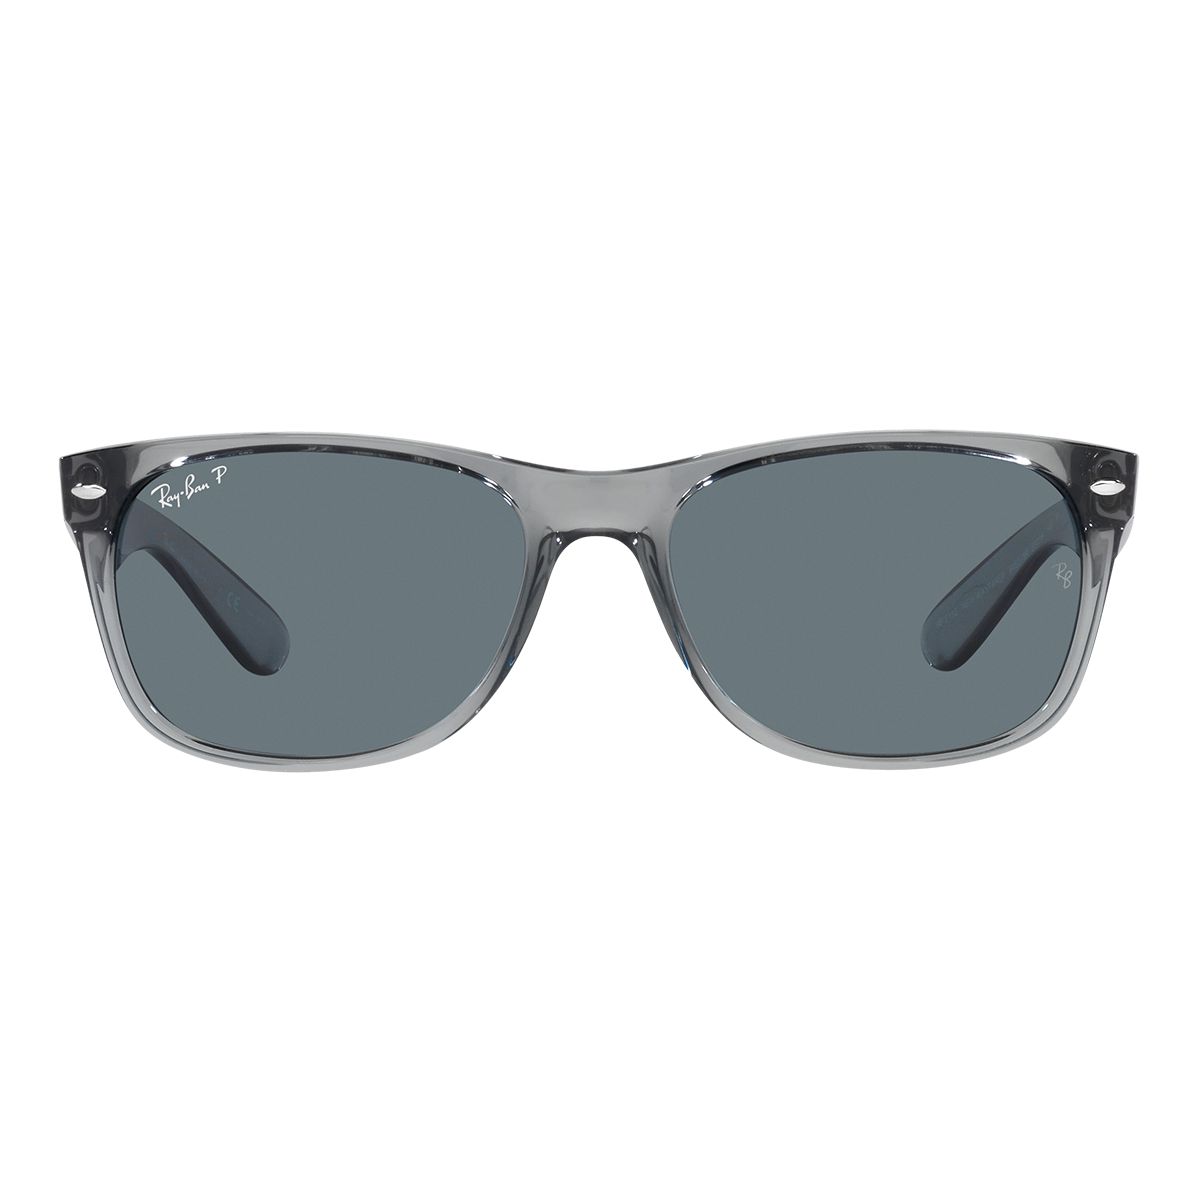 Image of Ray Ban New Wayfarer Sunglasses